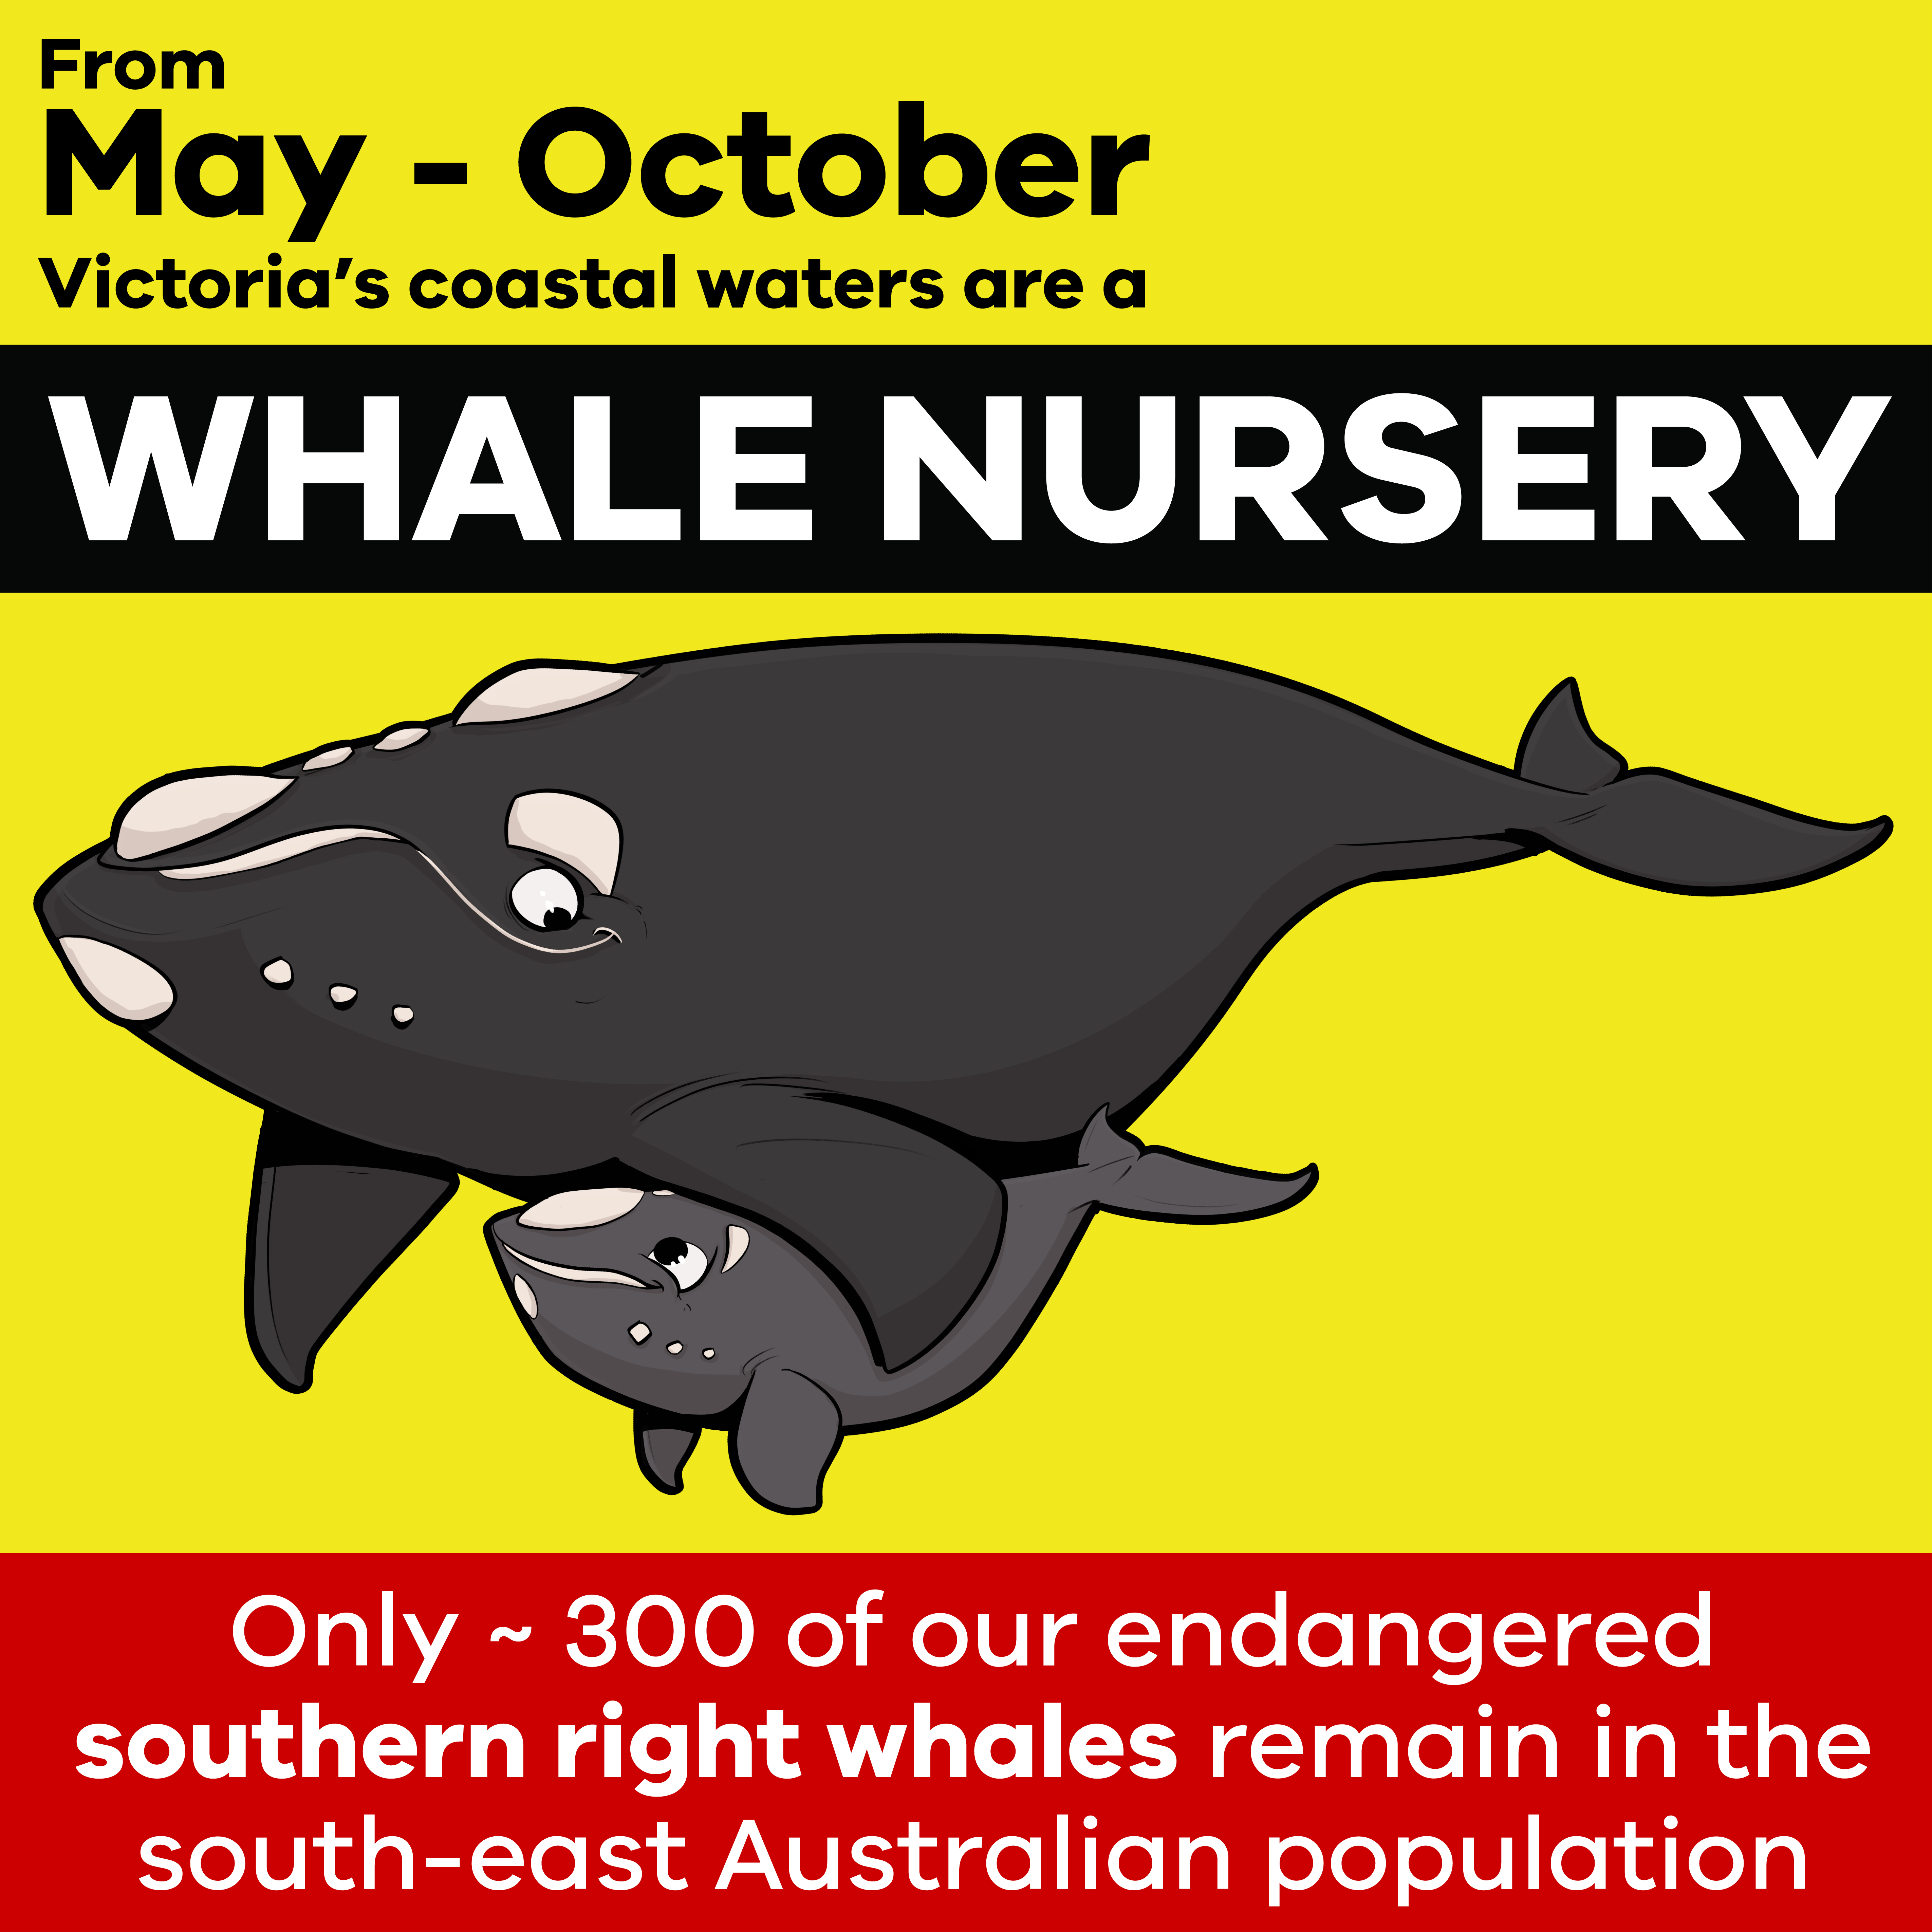 information flier on whale nurseries